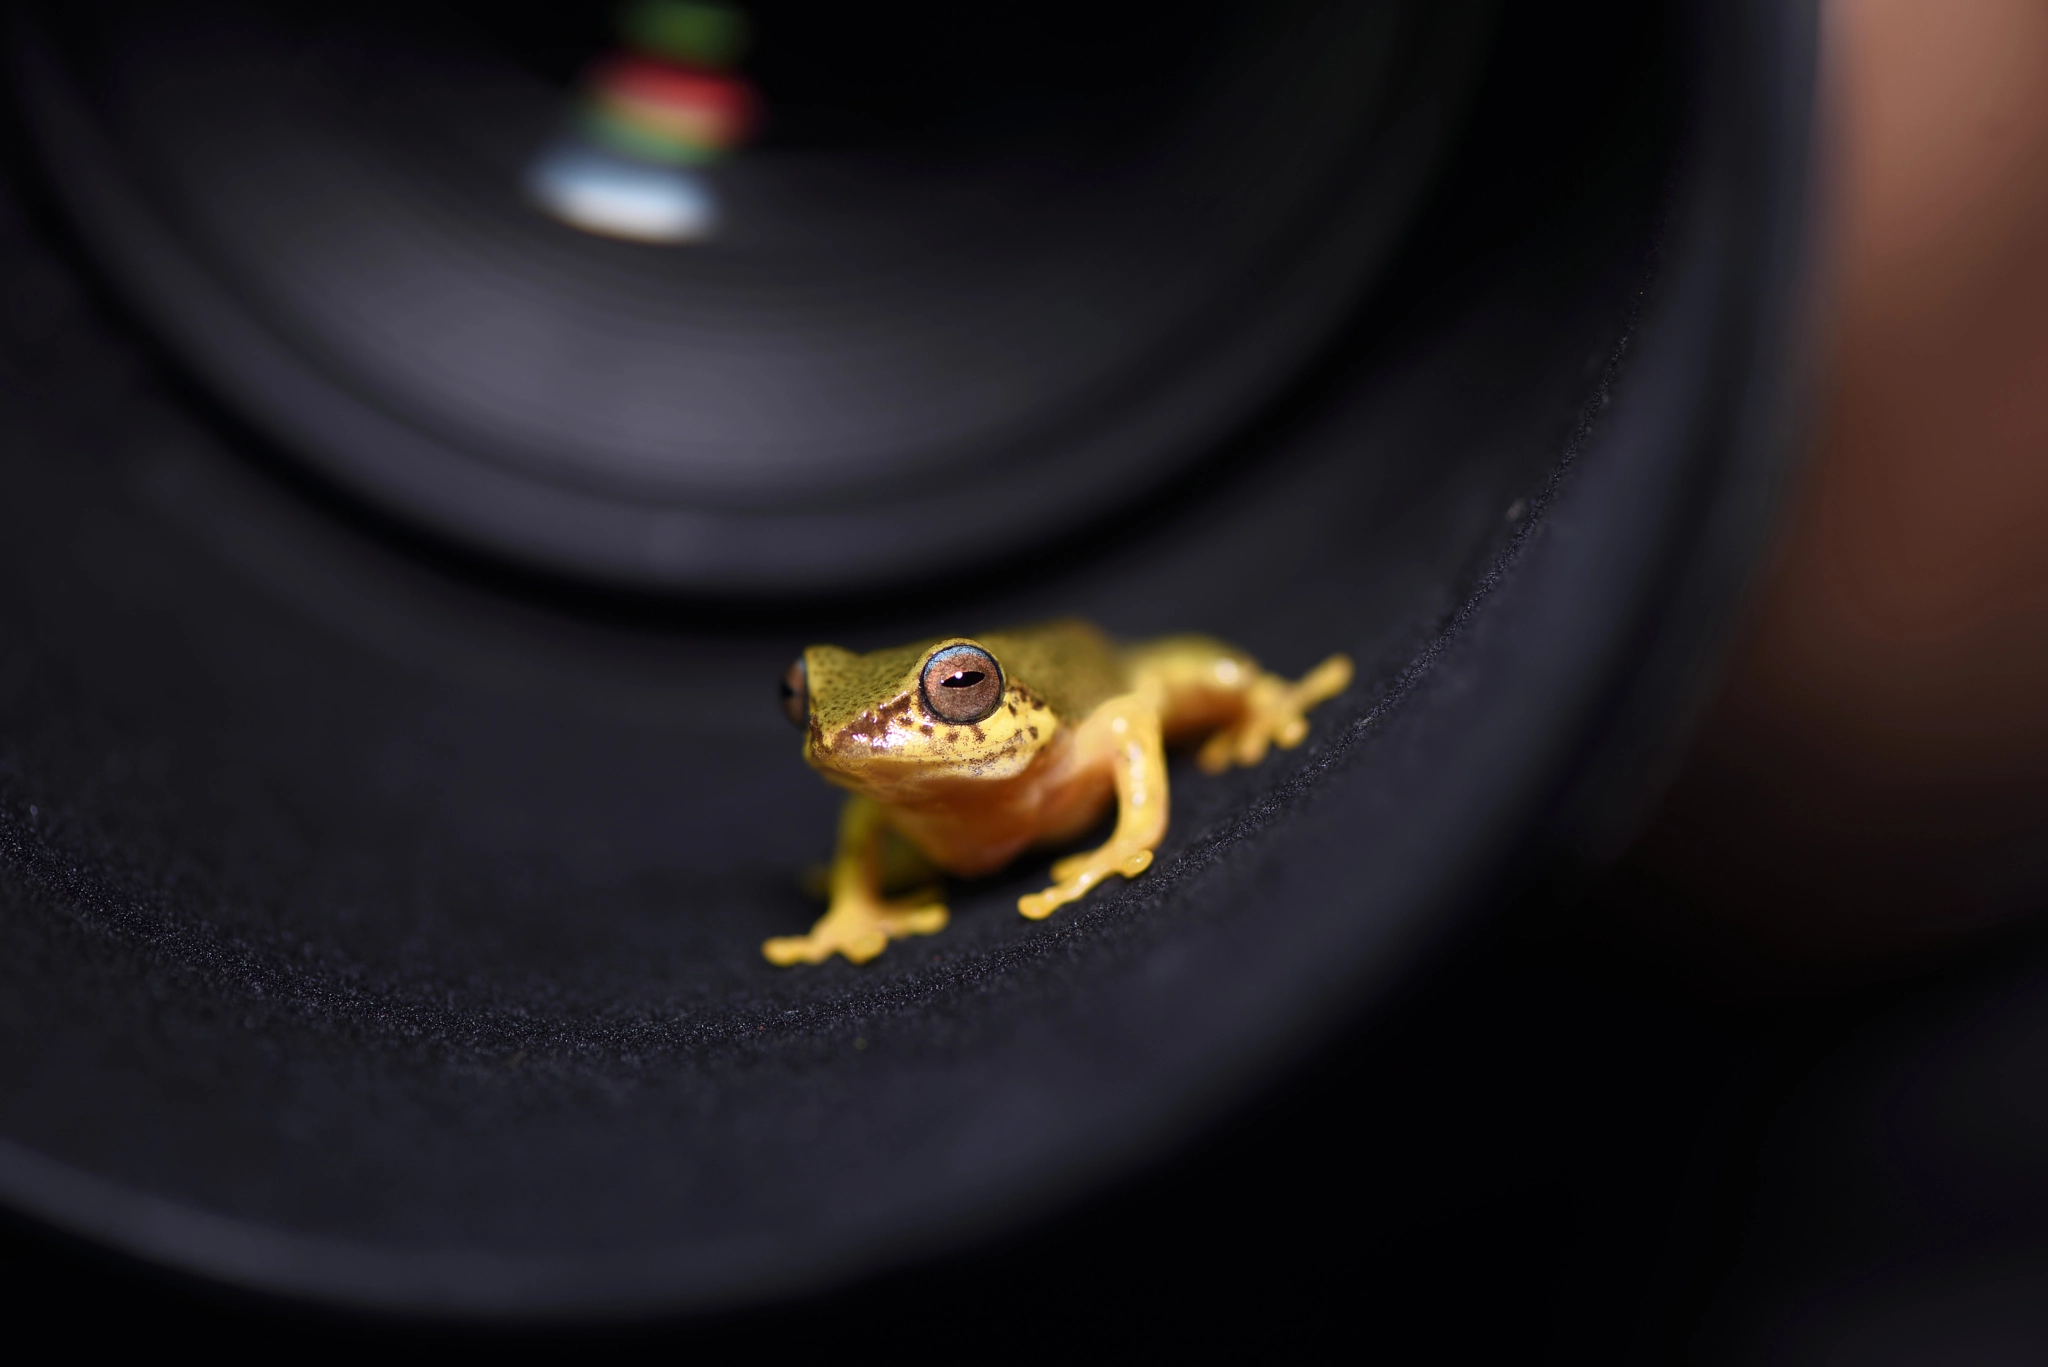 Bush frog inside camera lens